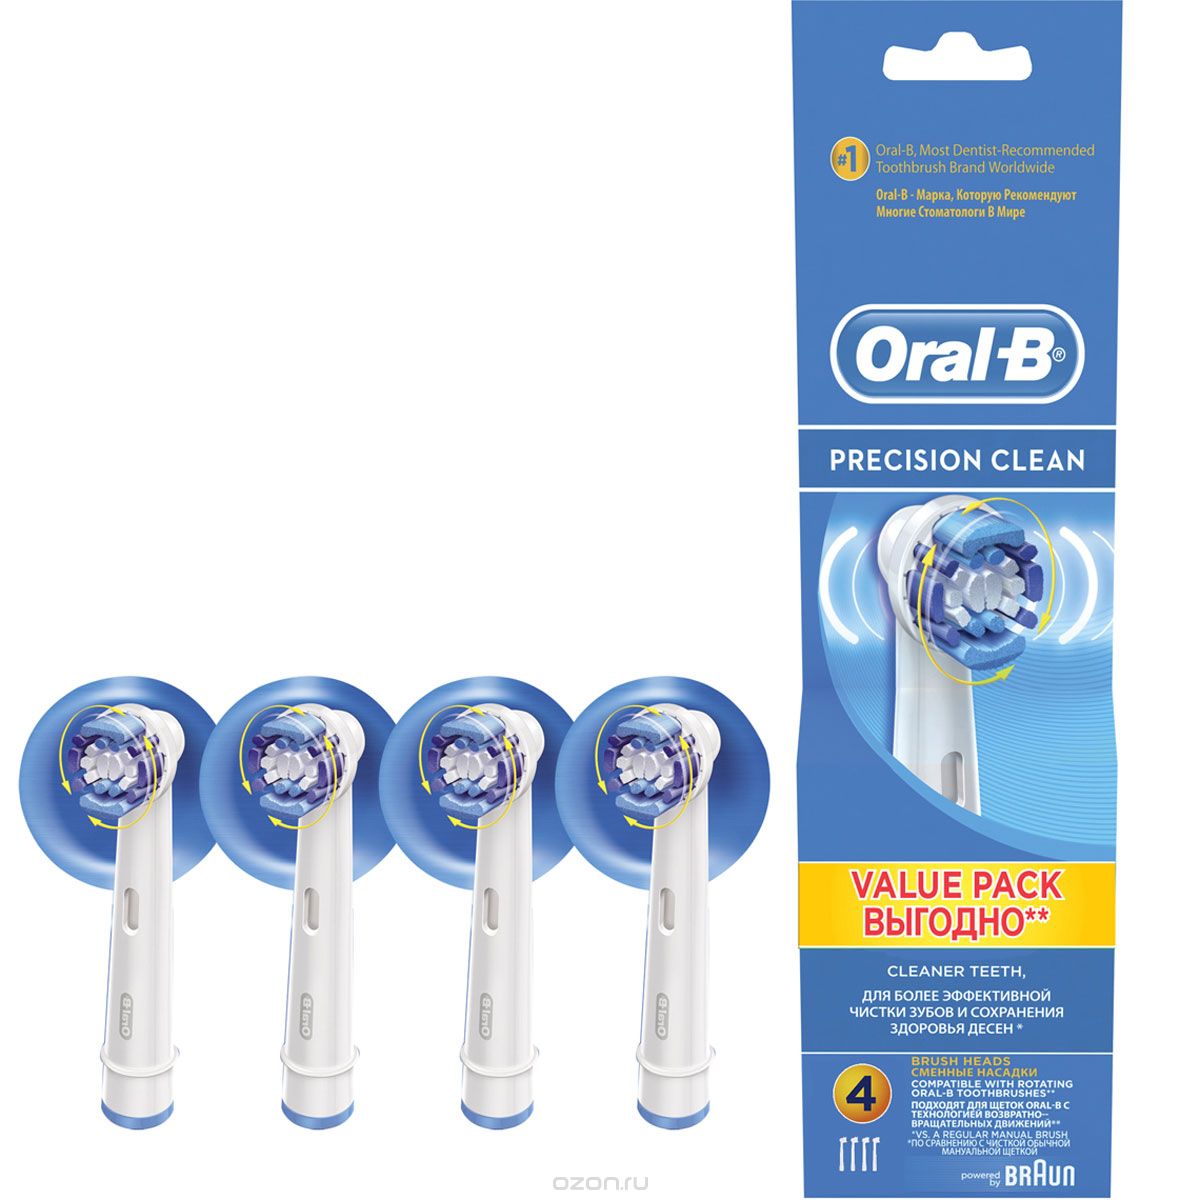      Oral-B Precision Clean, 4 